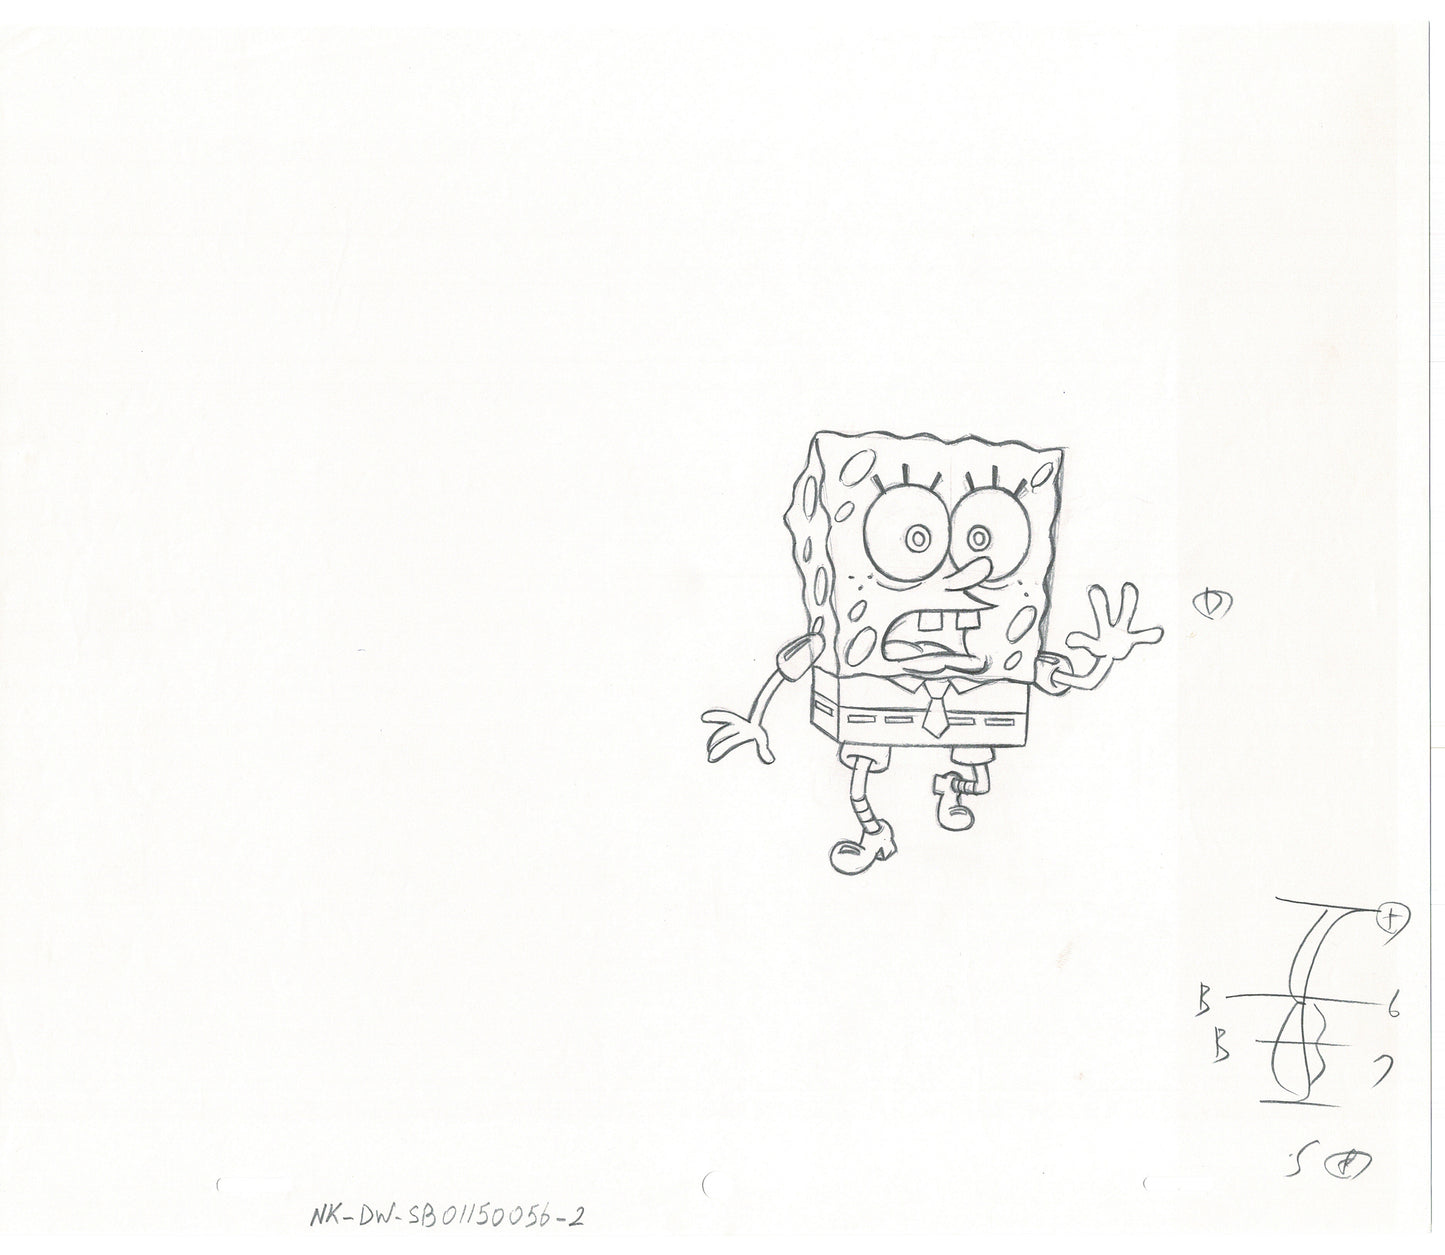 Spongebob Squarepants Production Animation Cel Drawing Nickelodeon 1999-2014 A-8